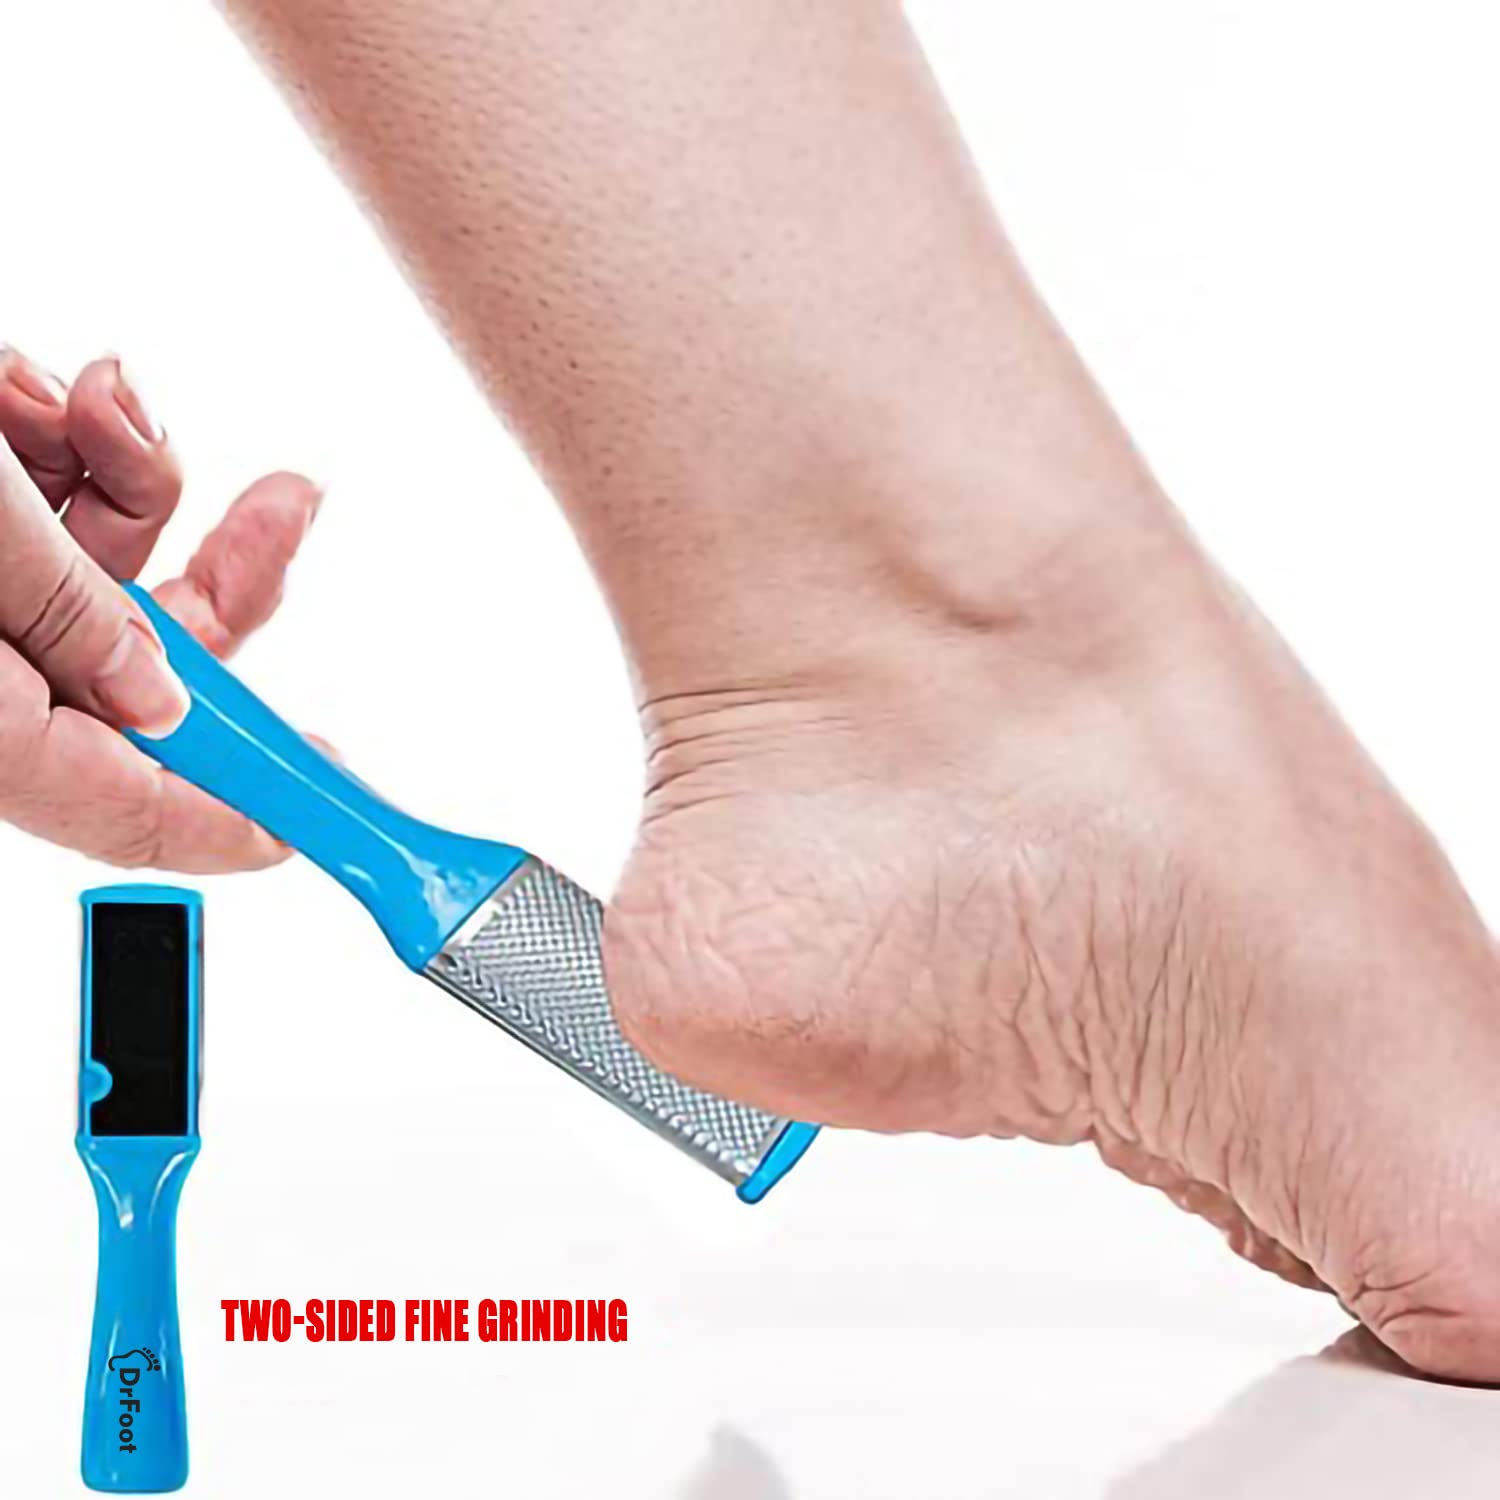 Organic B Foot Filer Feet Rasp Scrubber - Wooden Pedi Foot Scrubber Filer  for Dead Skin - Double Sided Foot Scraper Exfoliator for Dry and Wet Feet  Care - Organic B